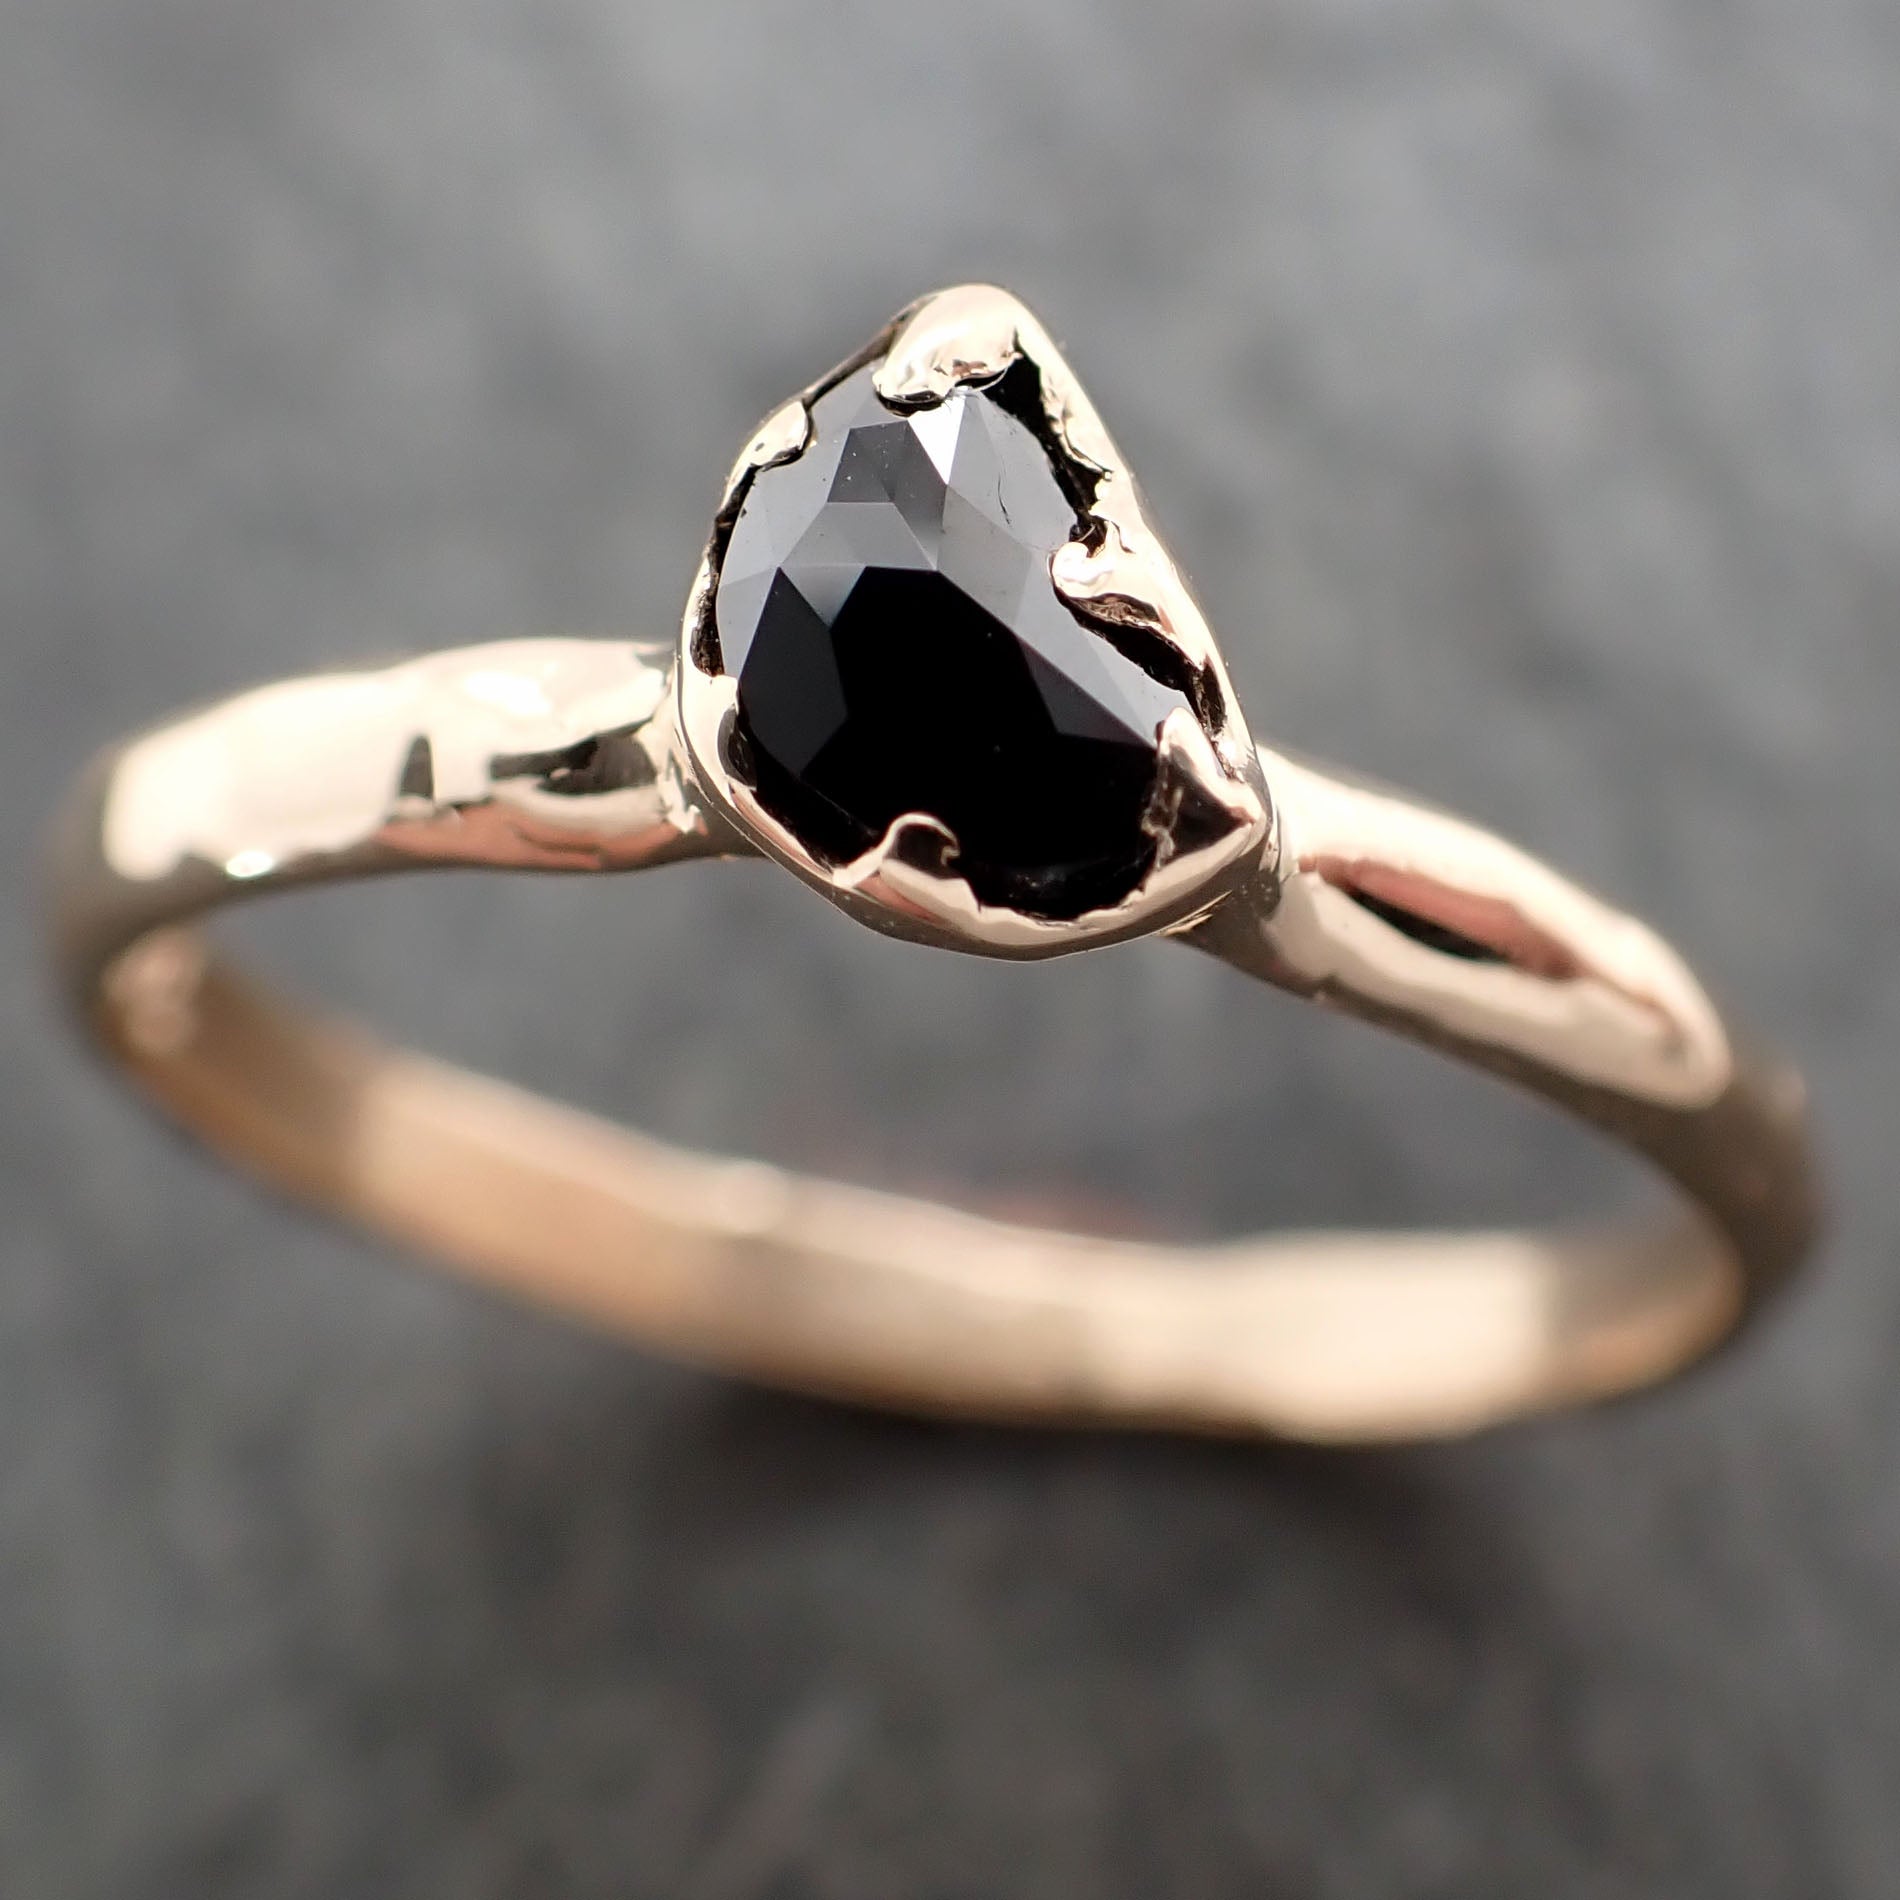 Fancy cut black Half moon Diamond Engagement 14k yellow Gold Solitaire Wedding Ring byAngeline 2856